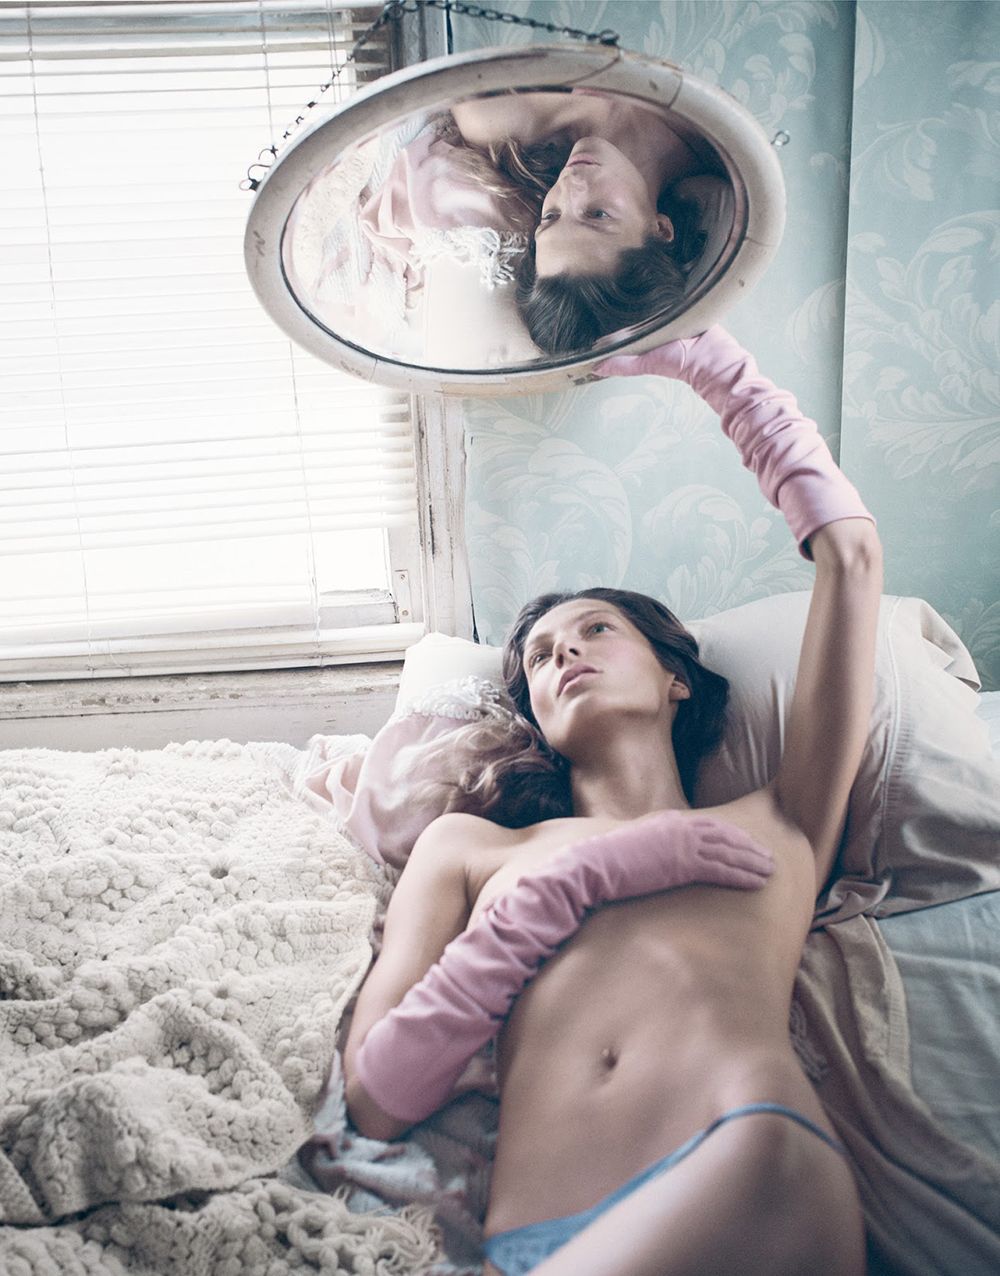 Daria Werbowy Topless photos